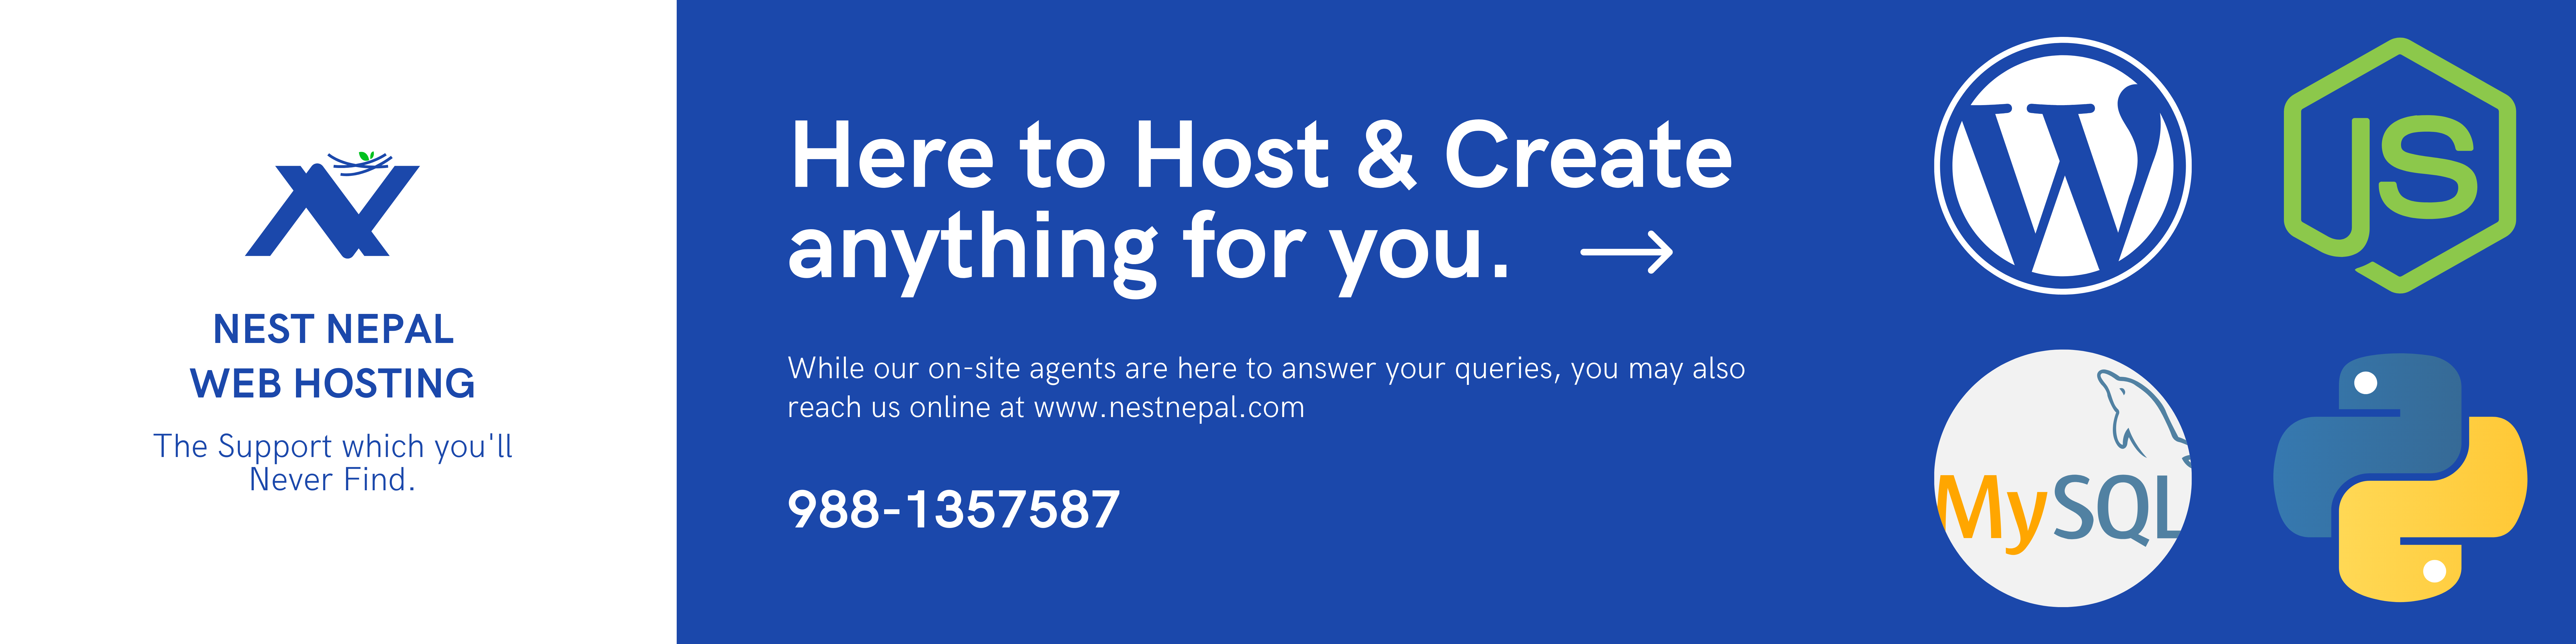 Nest Nepal Web Hosting